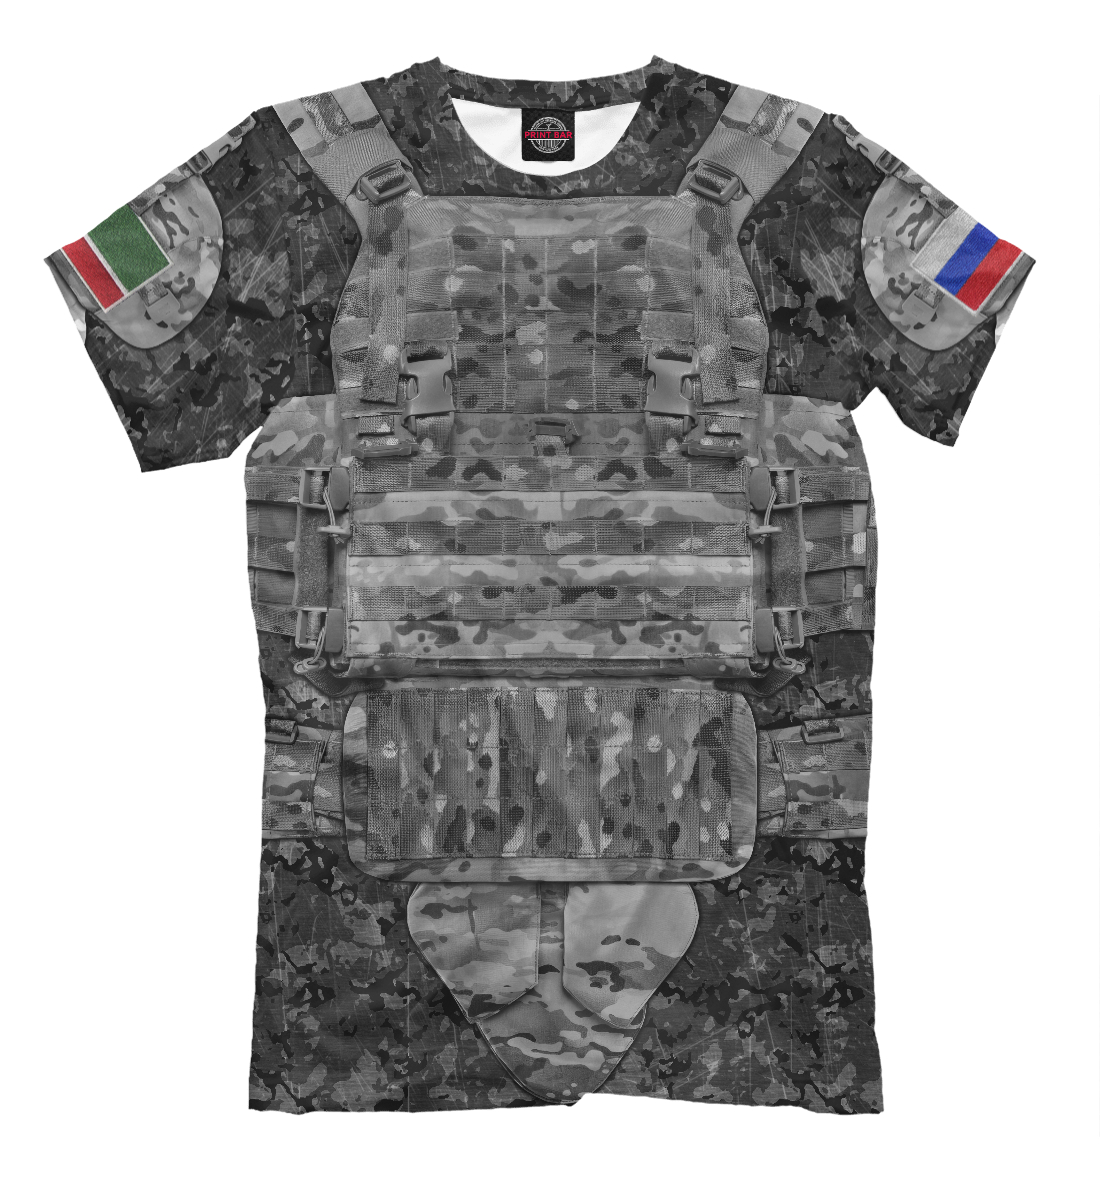 Футболка Чеченский Батальон для мужчин, артикул: BLV-874854-fut-2mp